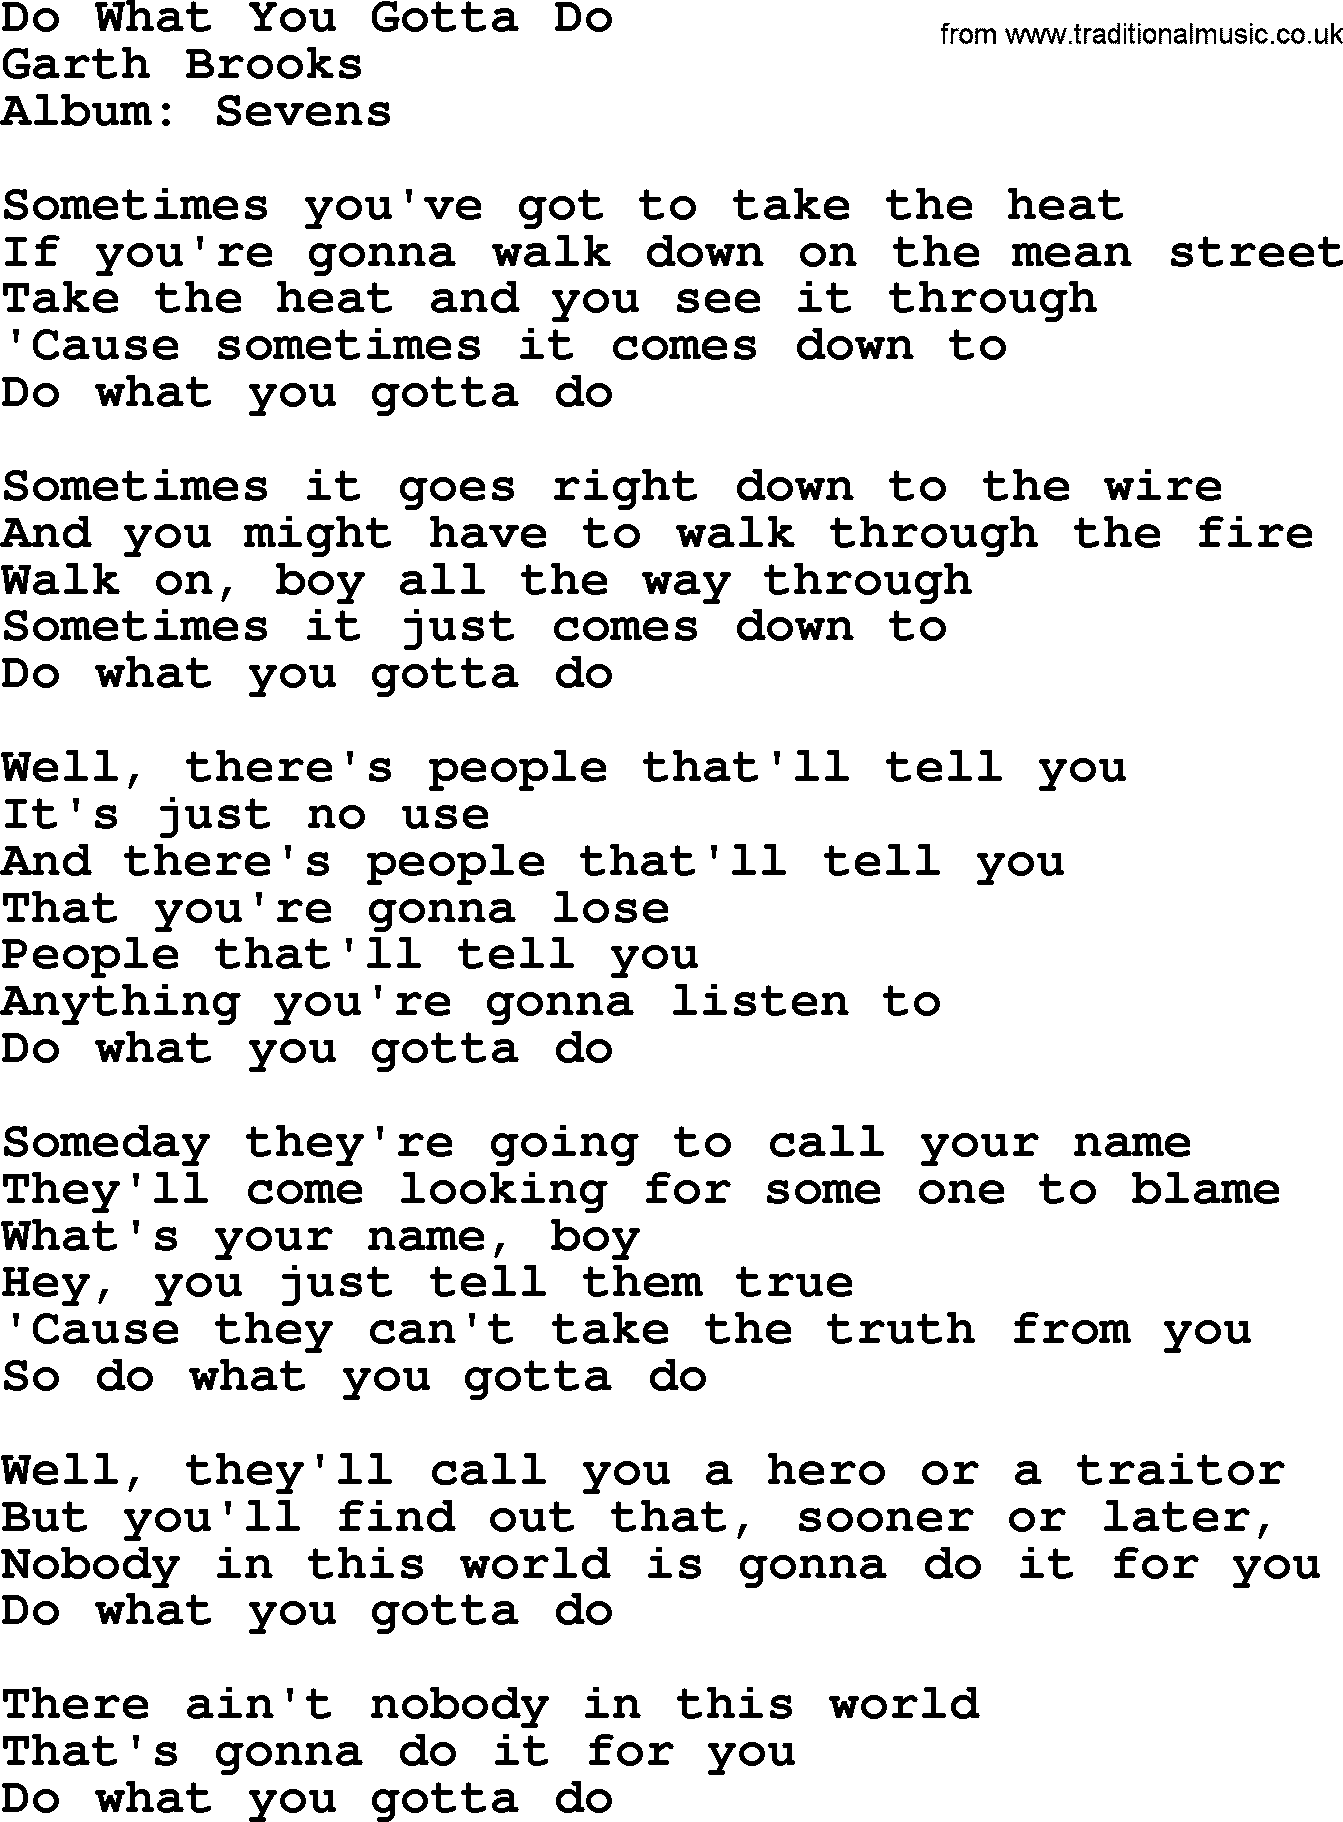 Garth Brooks song: Do What You Gotta Do, lyrics